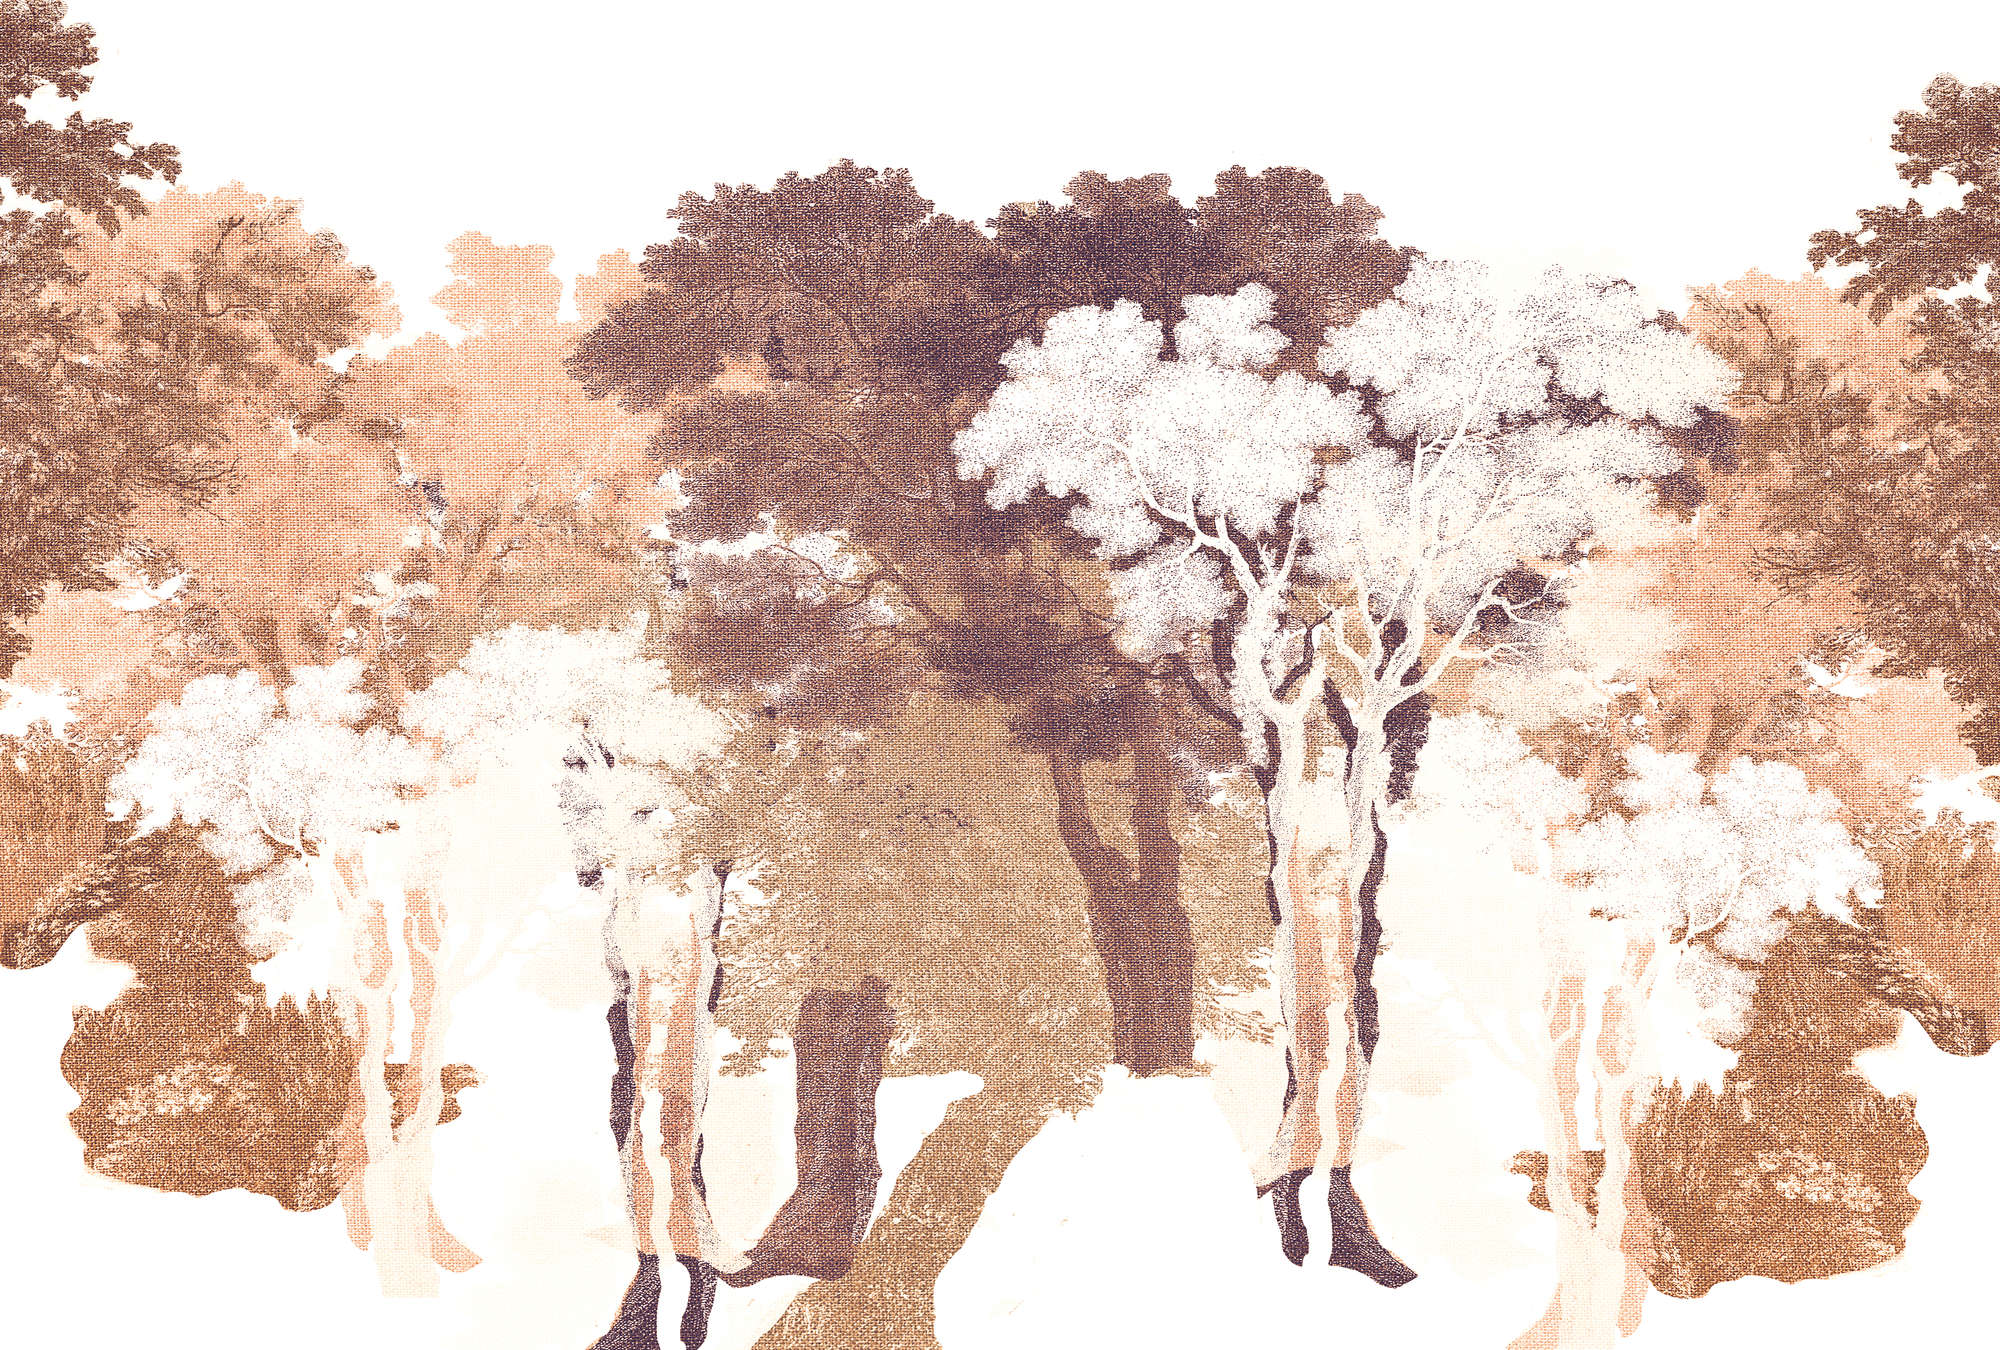             Photo wallpaper trees, textile look & forest landscape - orange, white, grey
        